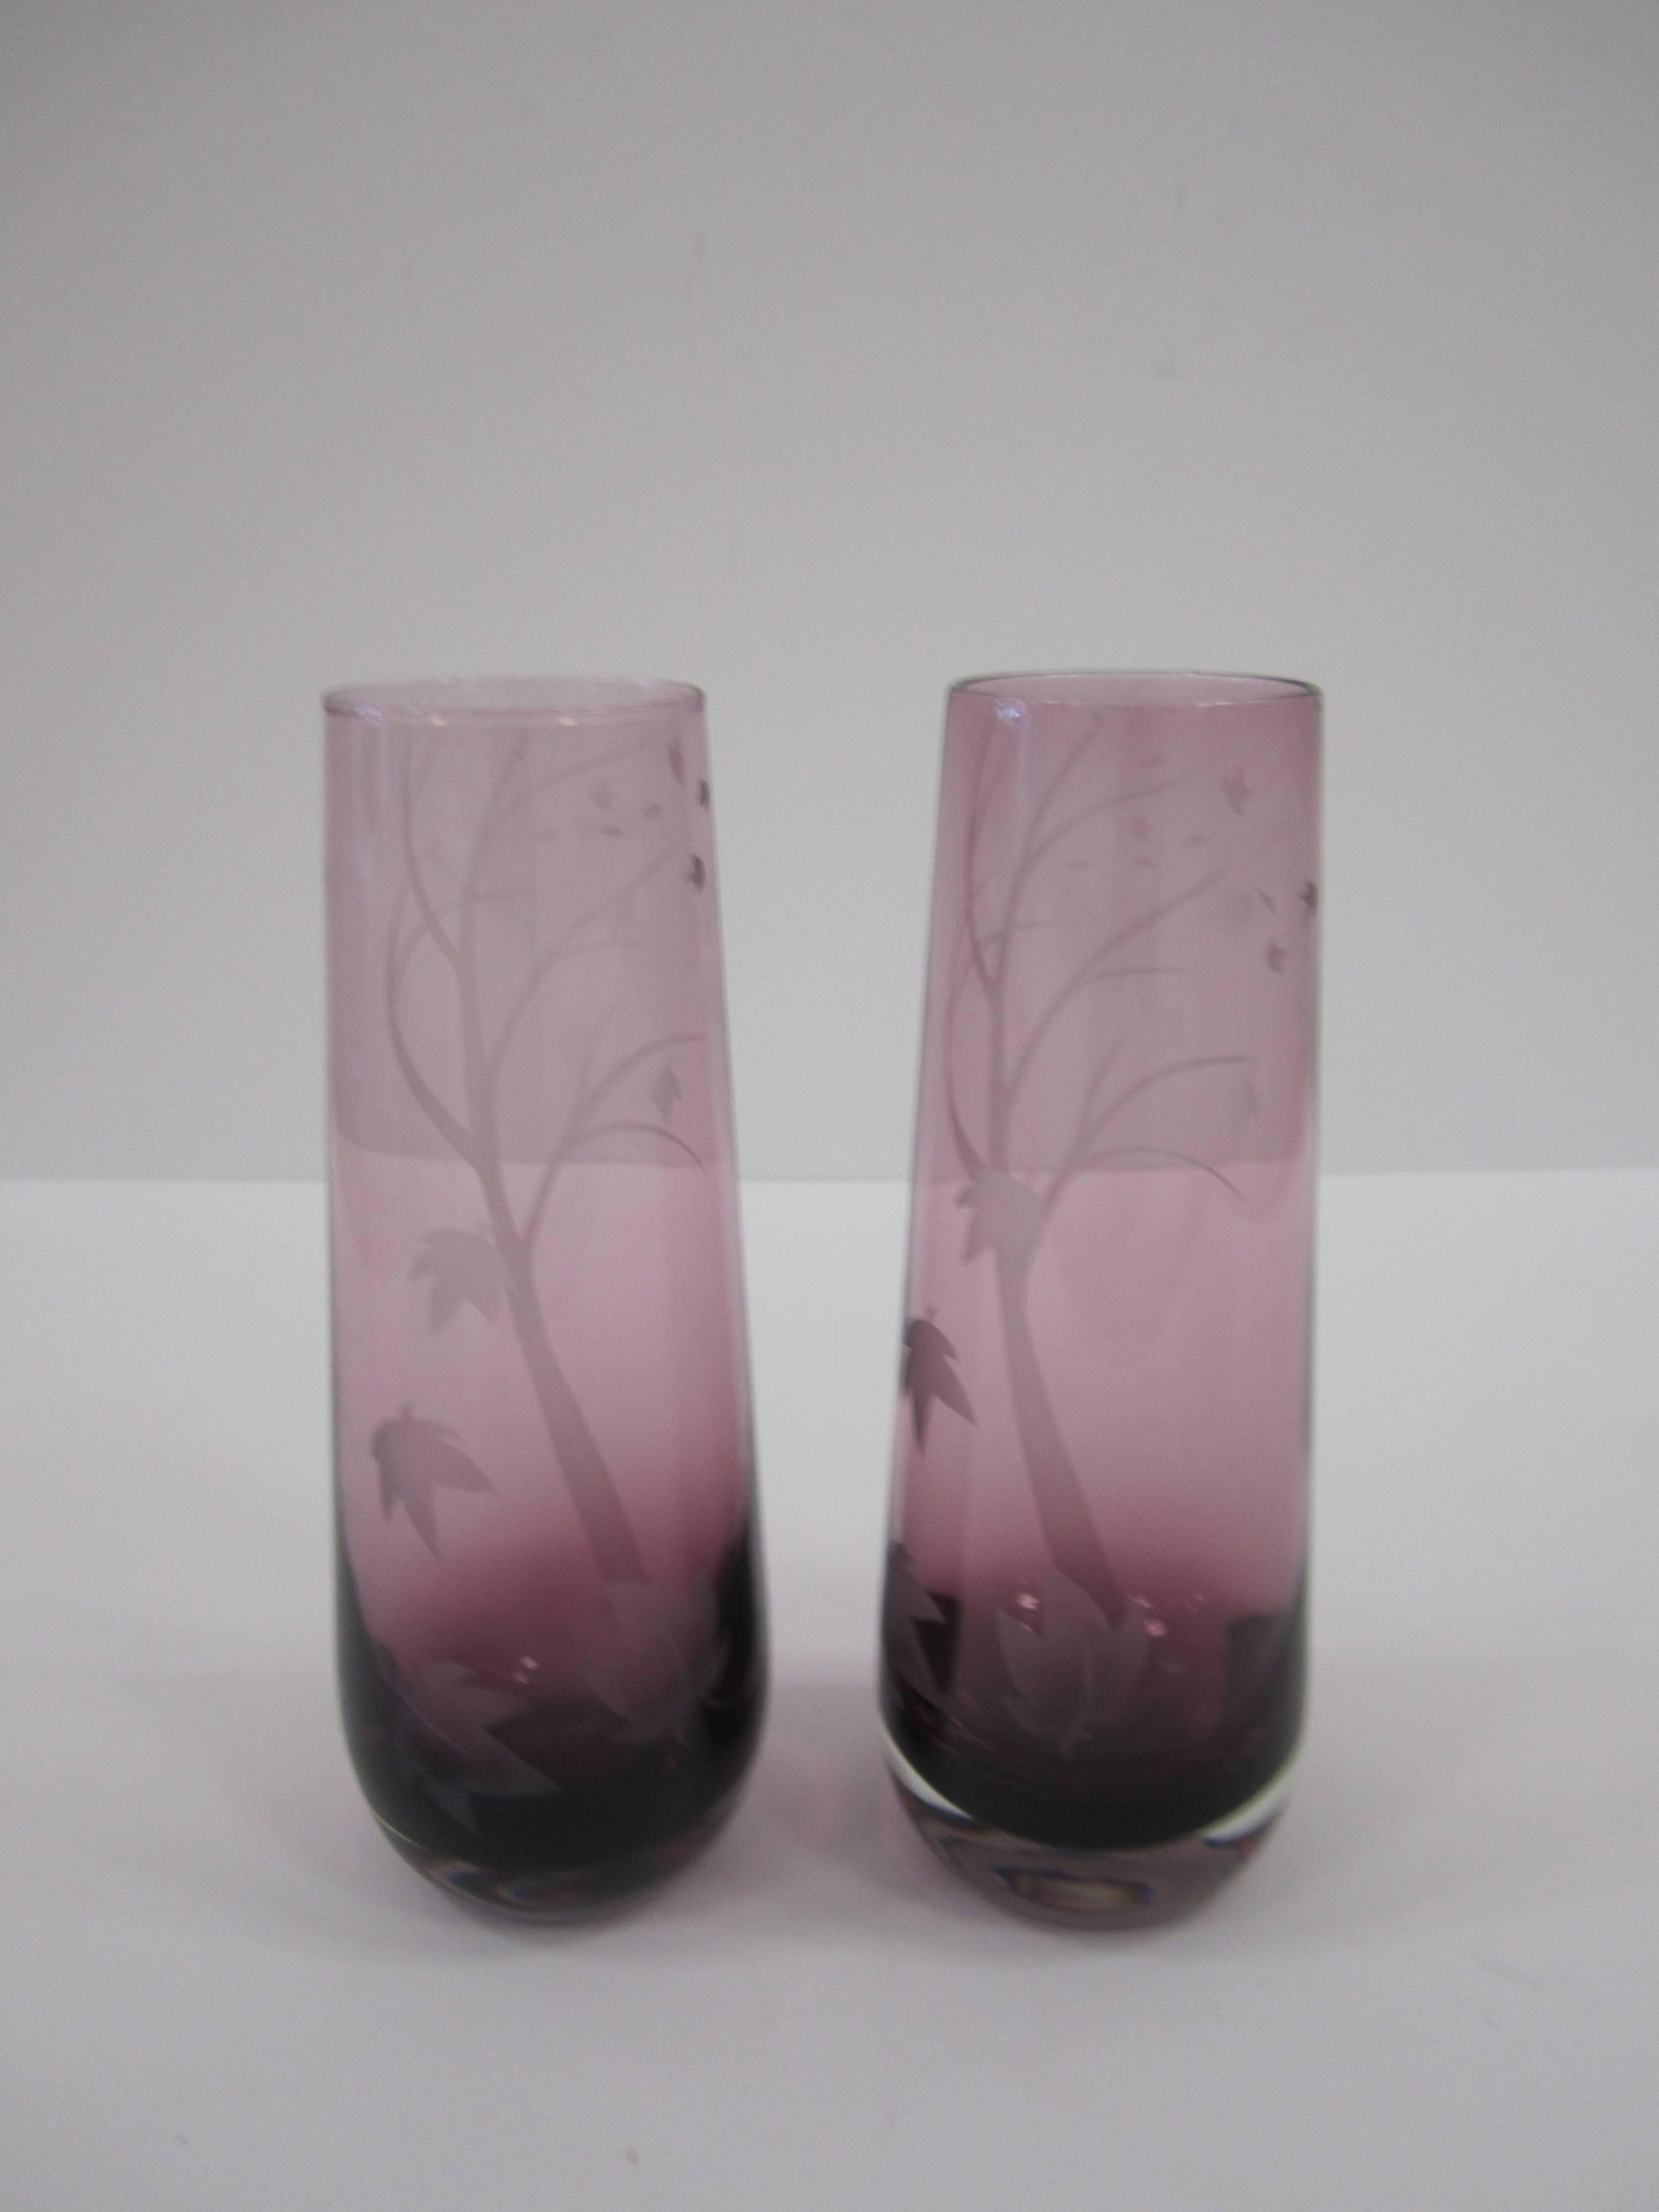 Organic Modern Purple Amethyst Art Glass Vases, 1980s, Pair and Signed